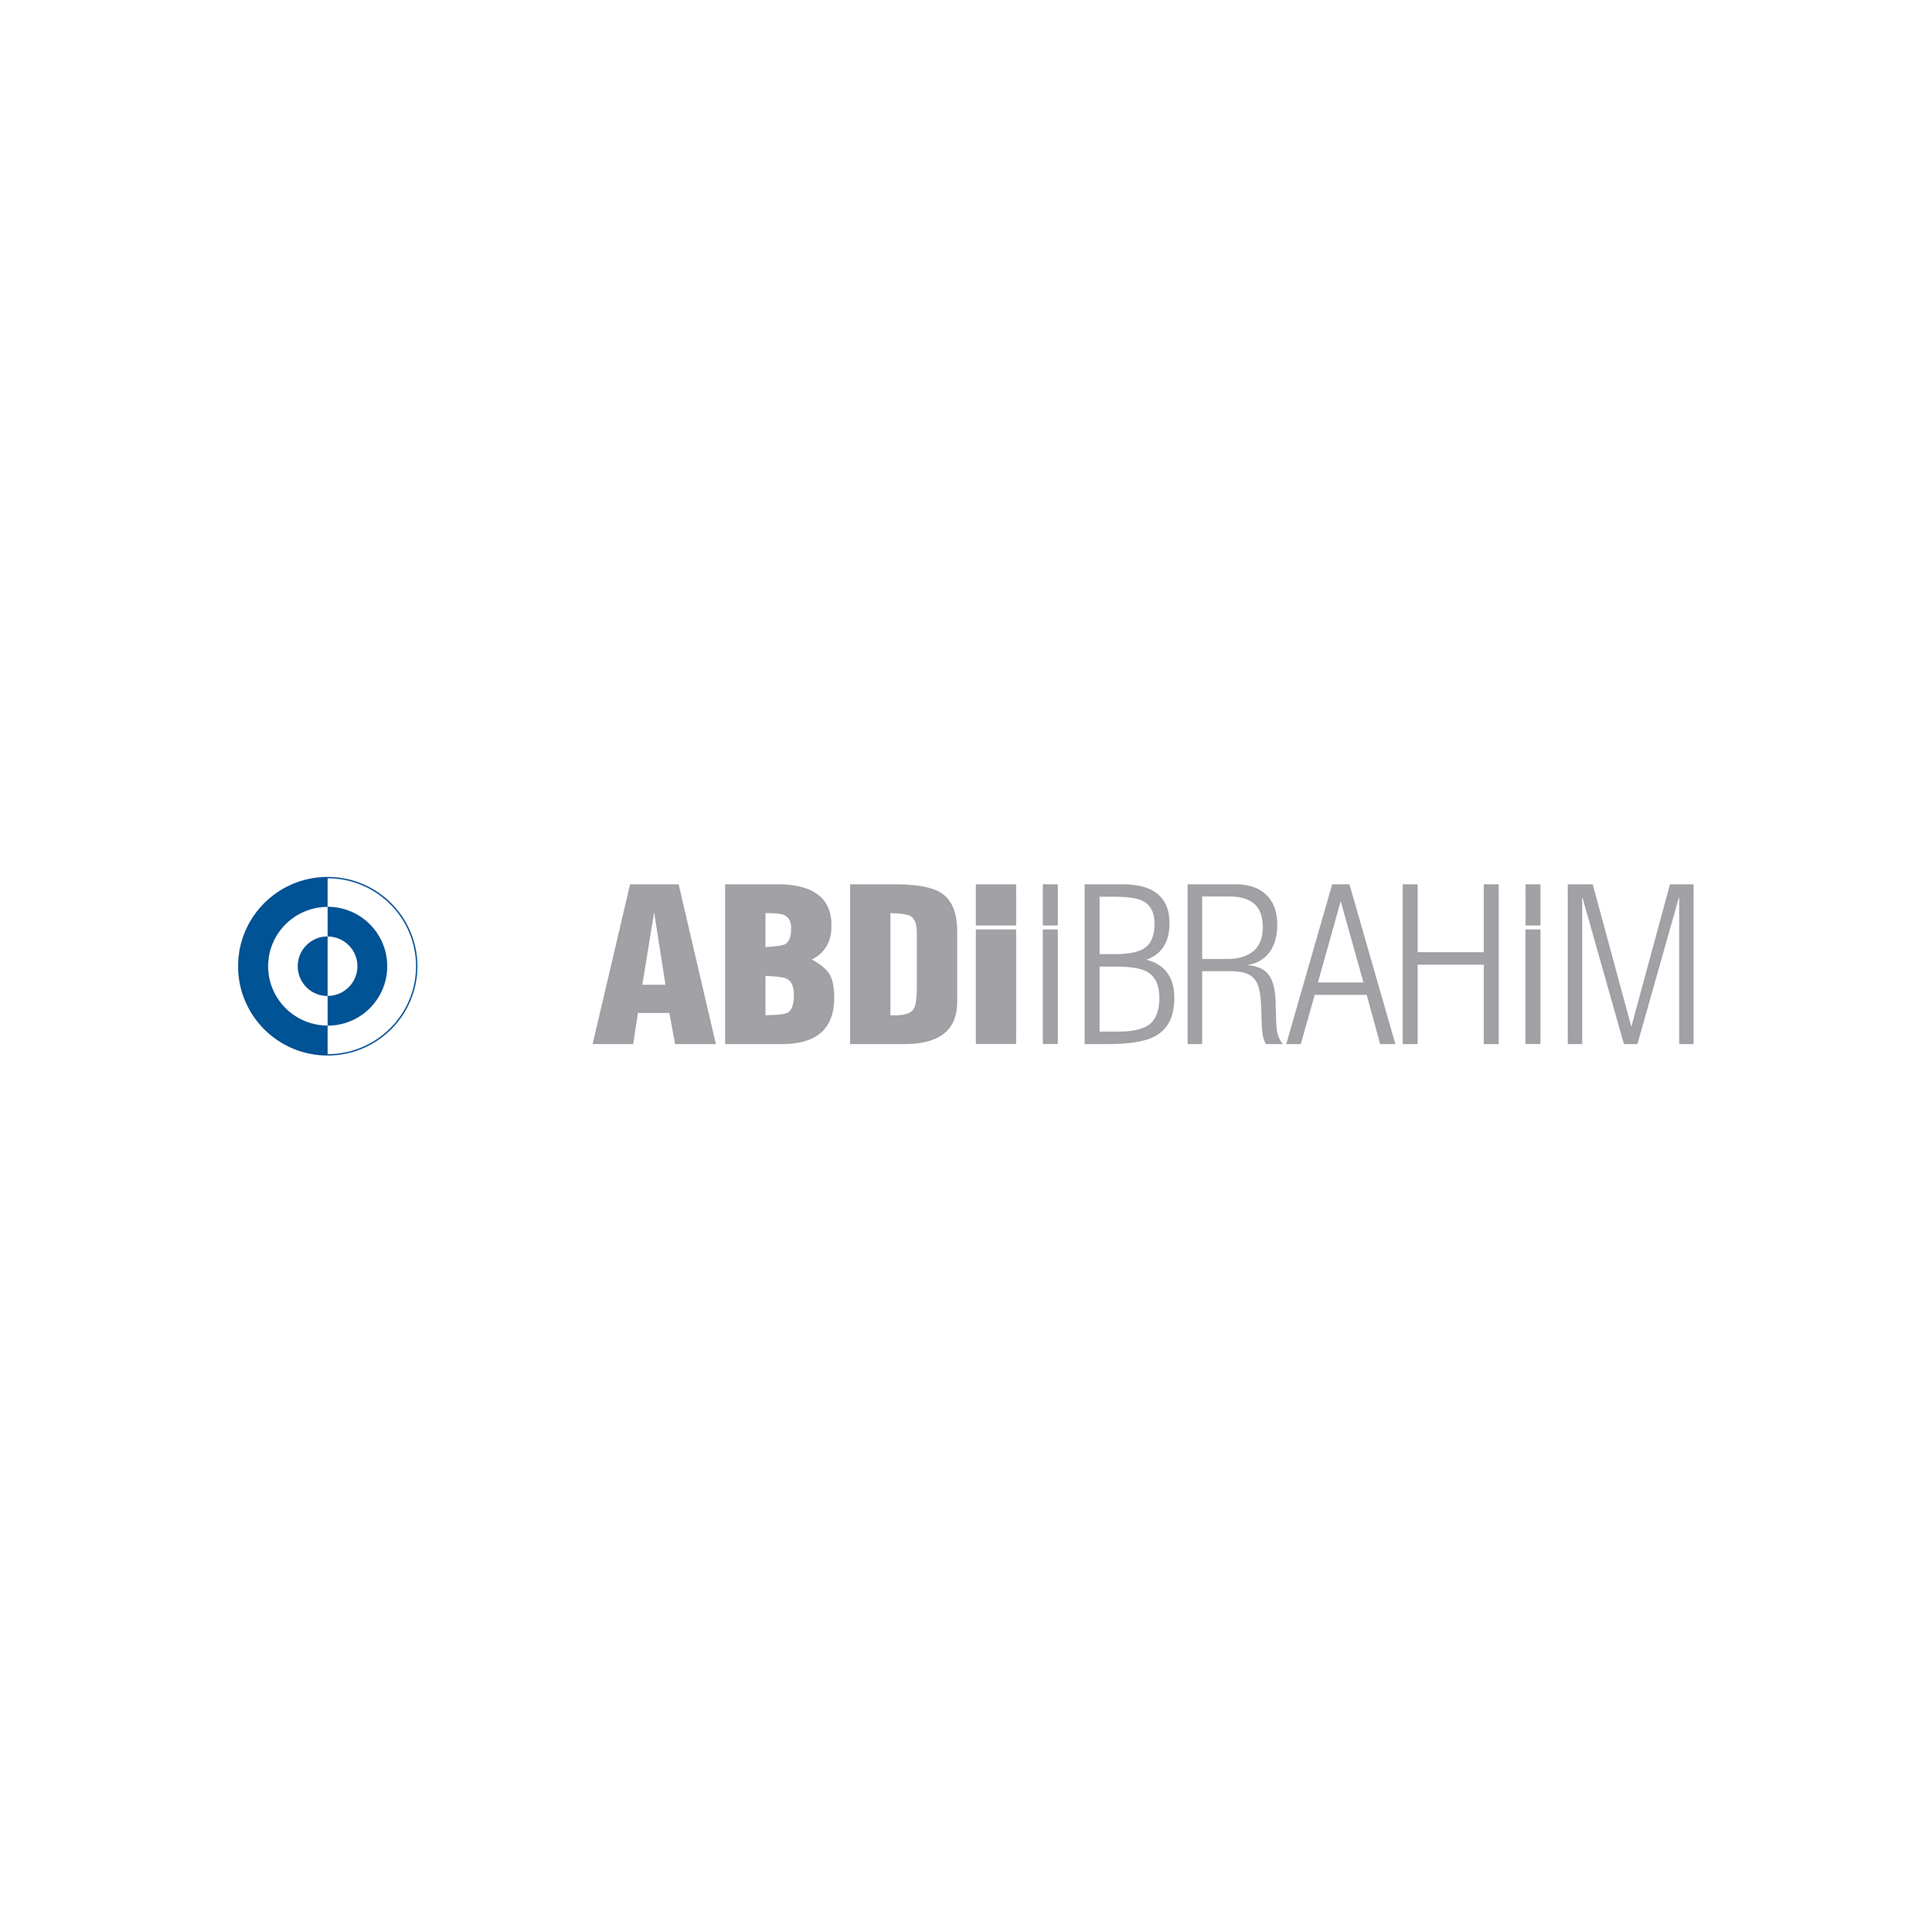 ABDI Ibrahim